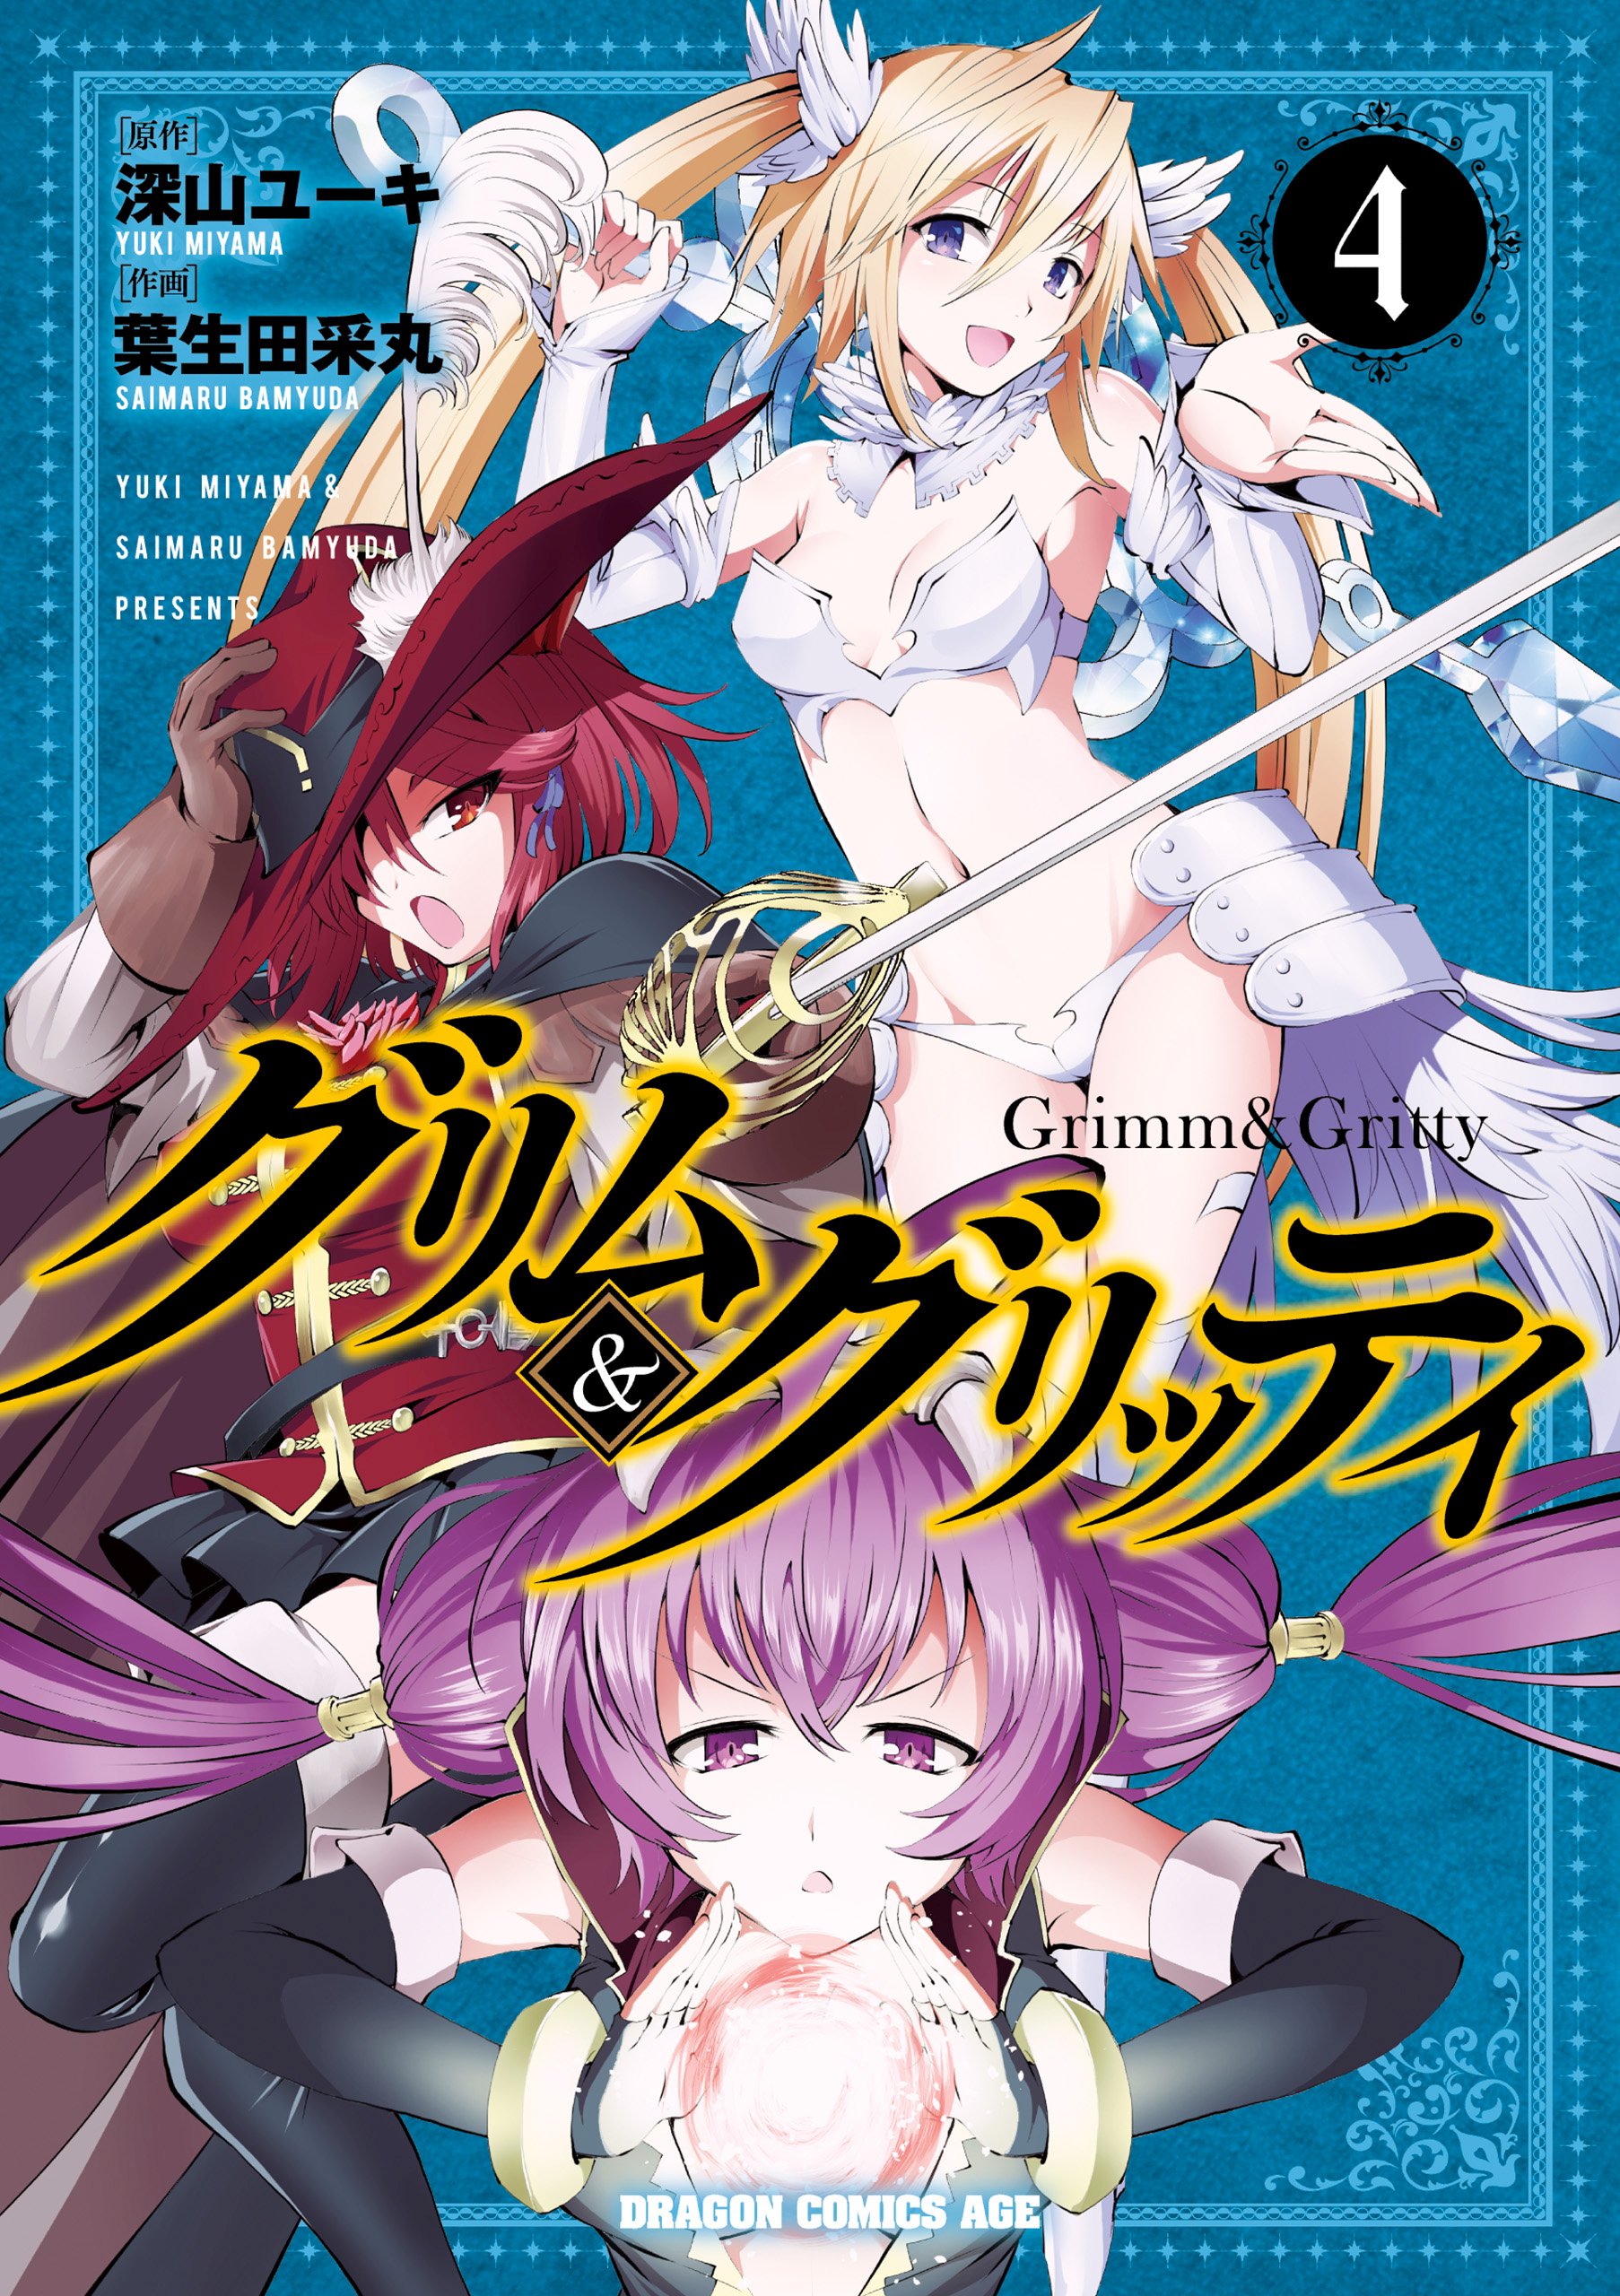 Grimm & Gritty Manga